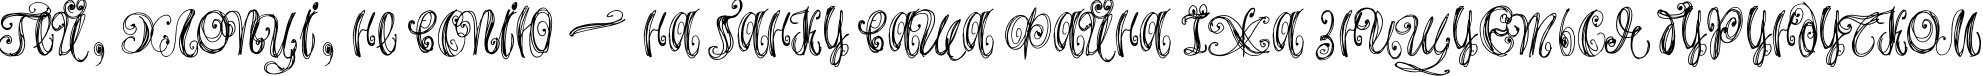 Пример написания шрифтом Airy текста на украинском